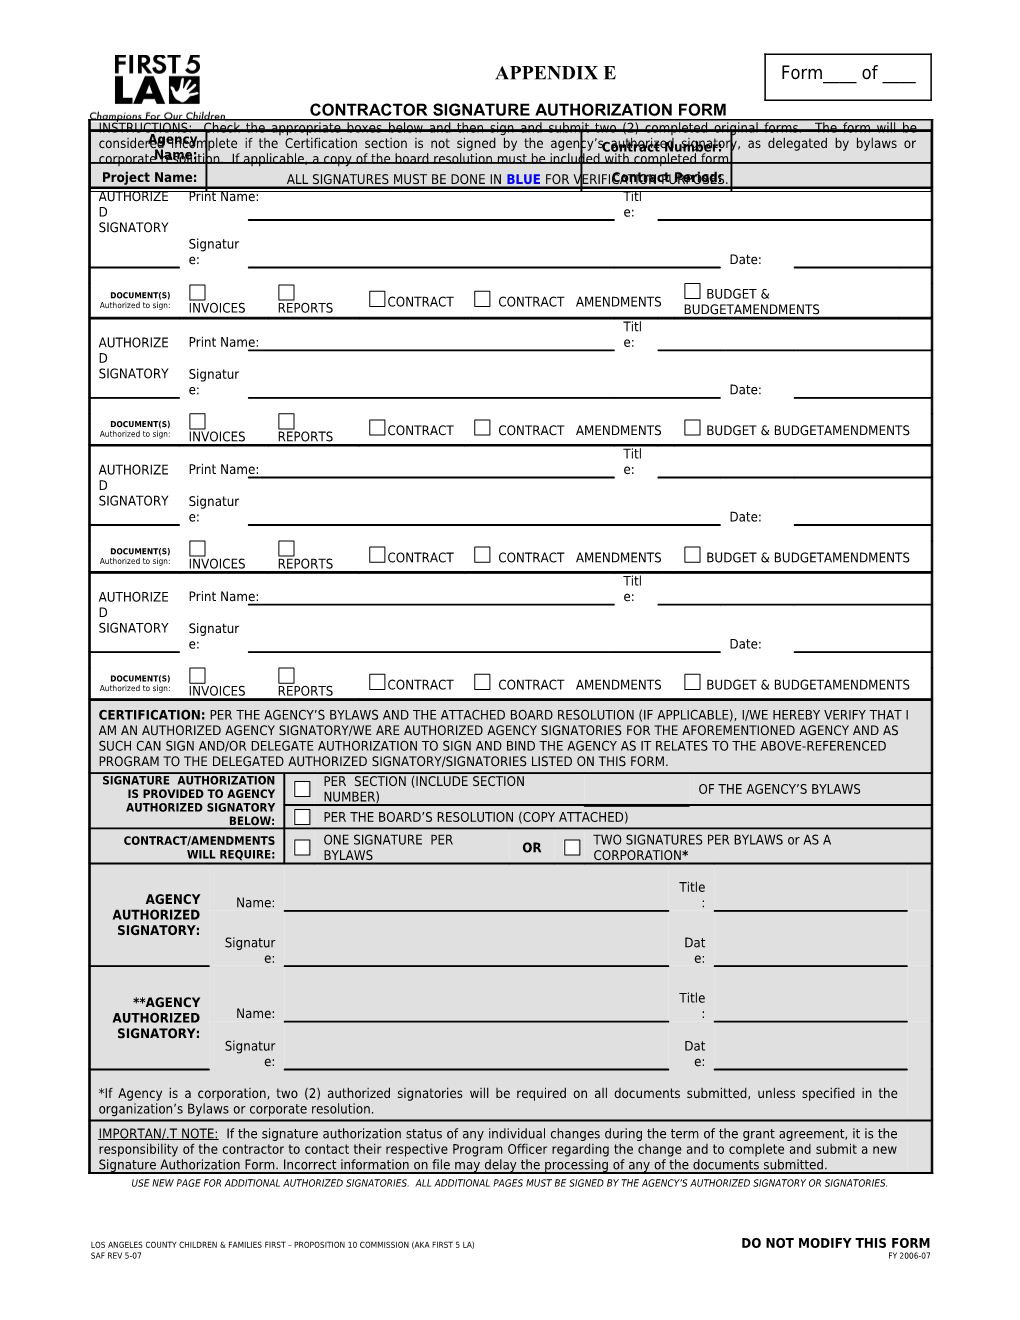 Contractorsignature Authorization Form